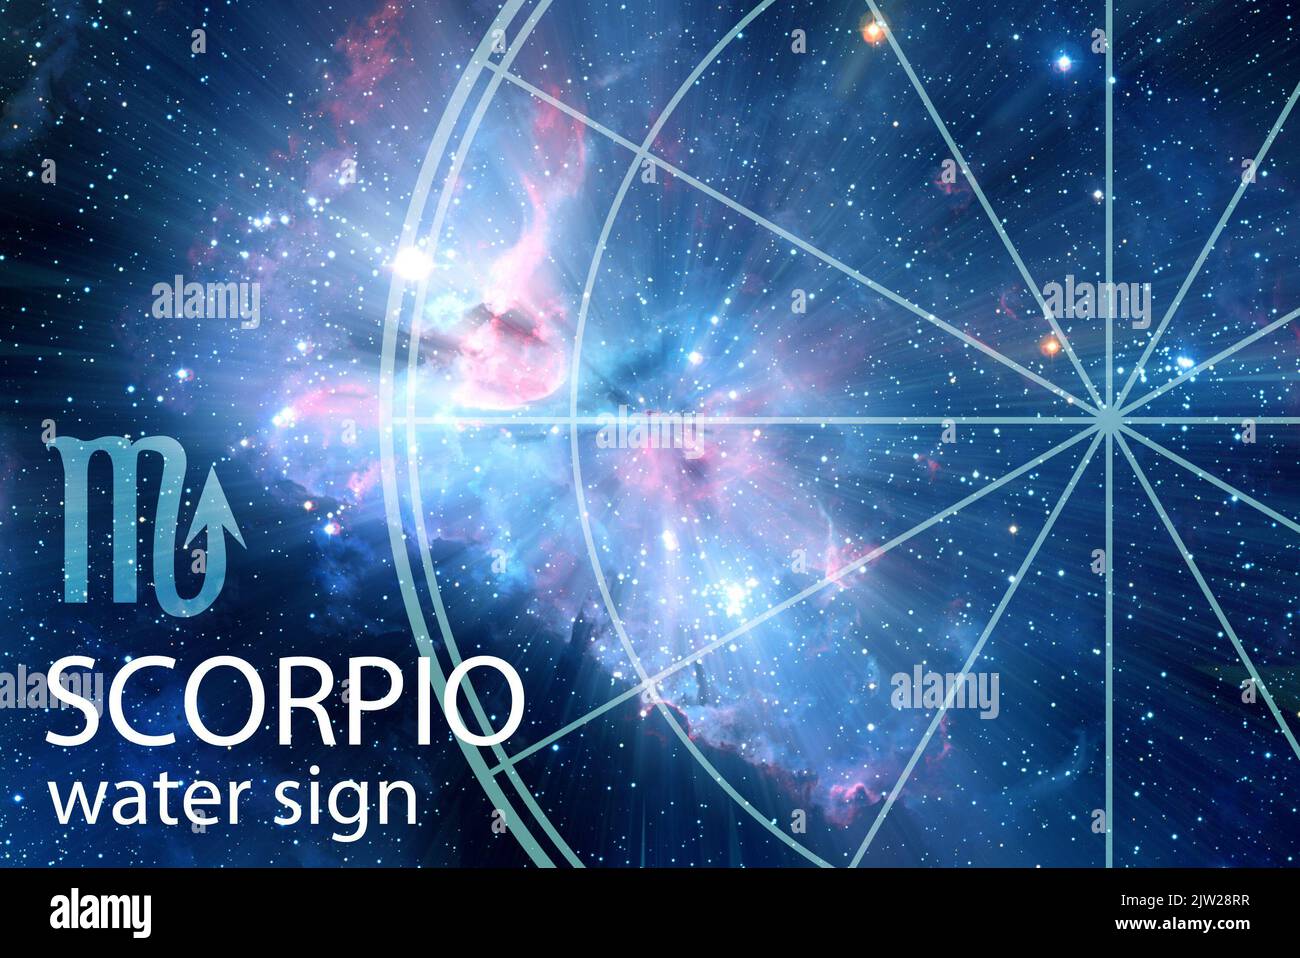 astrology symbol of the zodiac sign of Scorpio Stock Photo